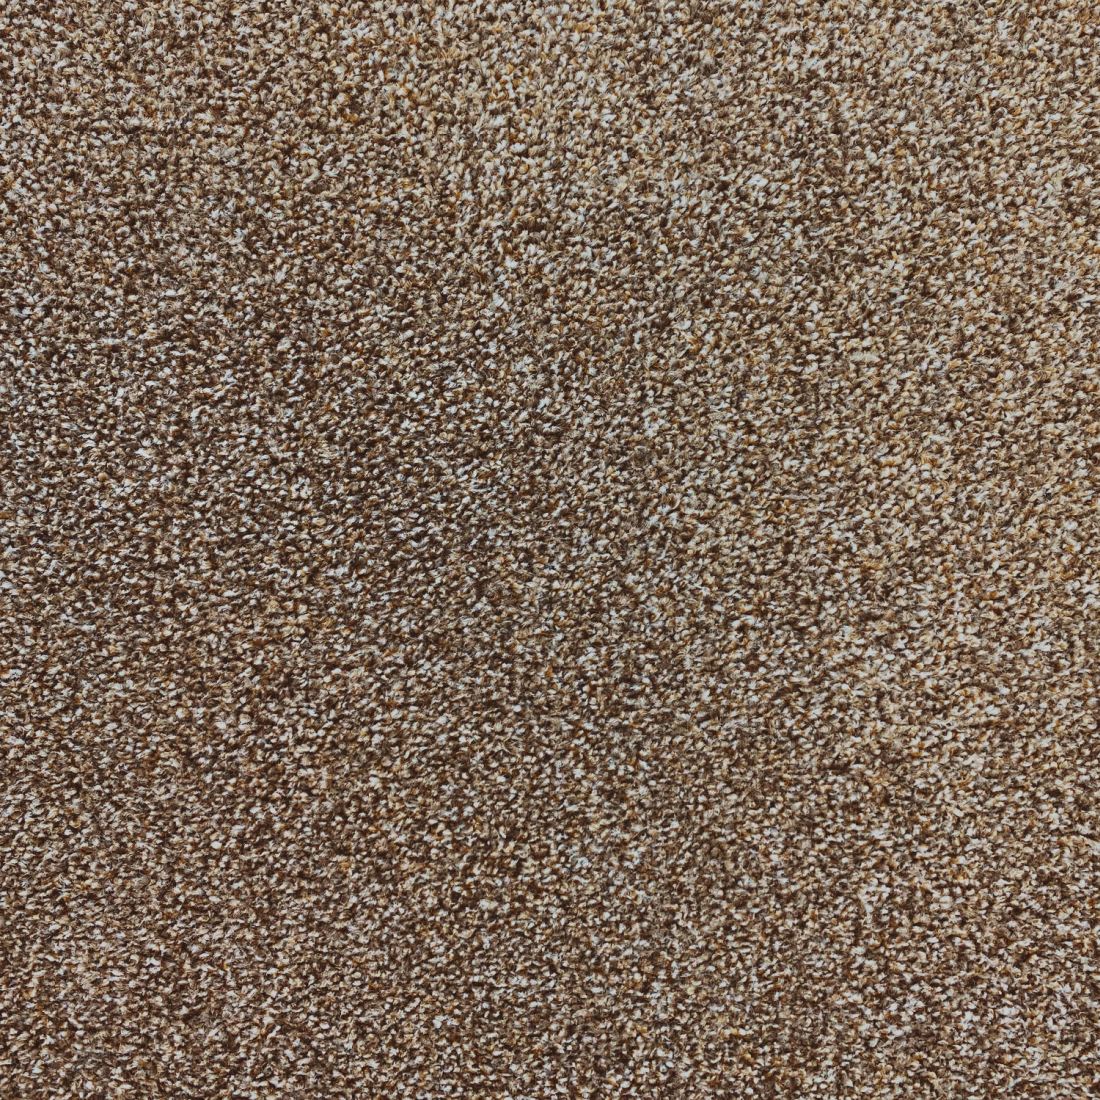 Invincible Rustic Stain Resistant Twist Carpet - Espresso